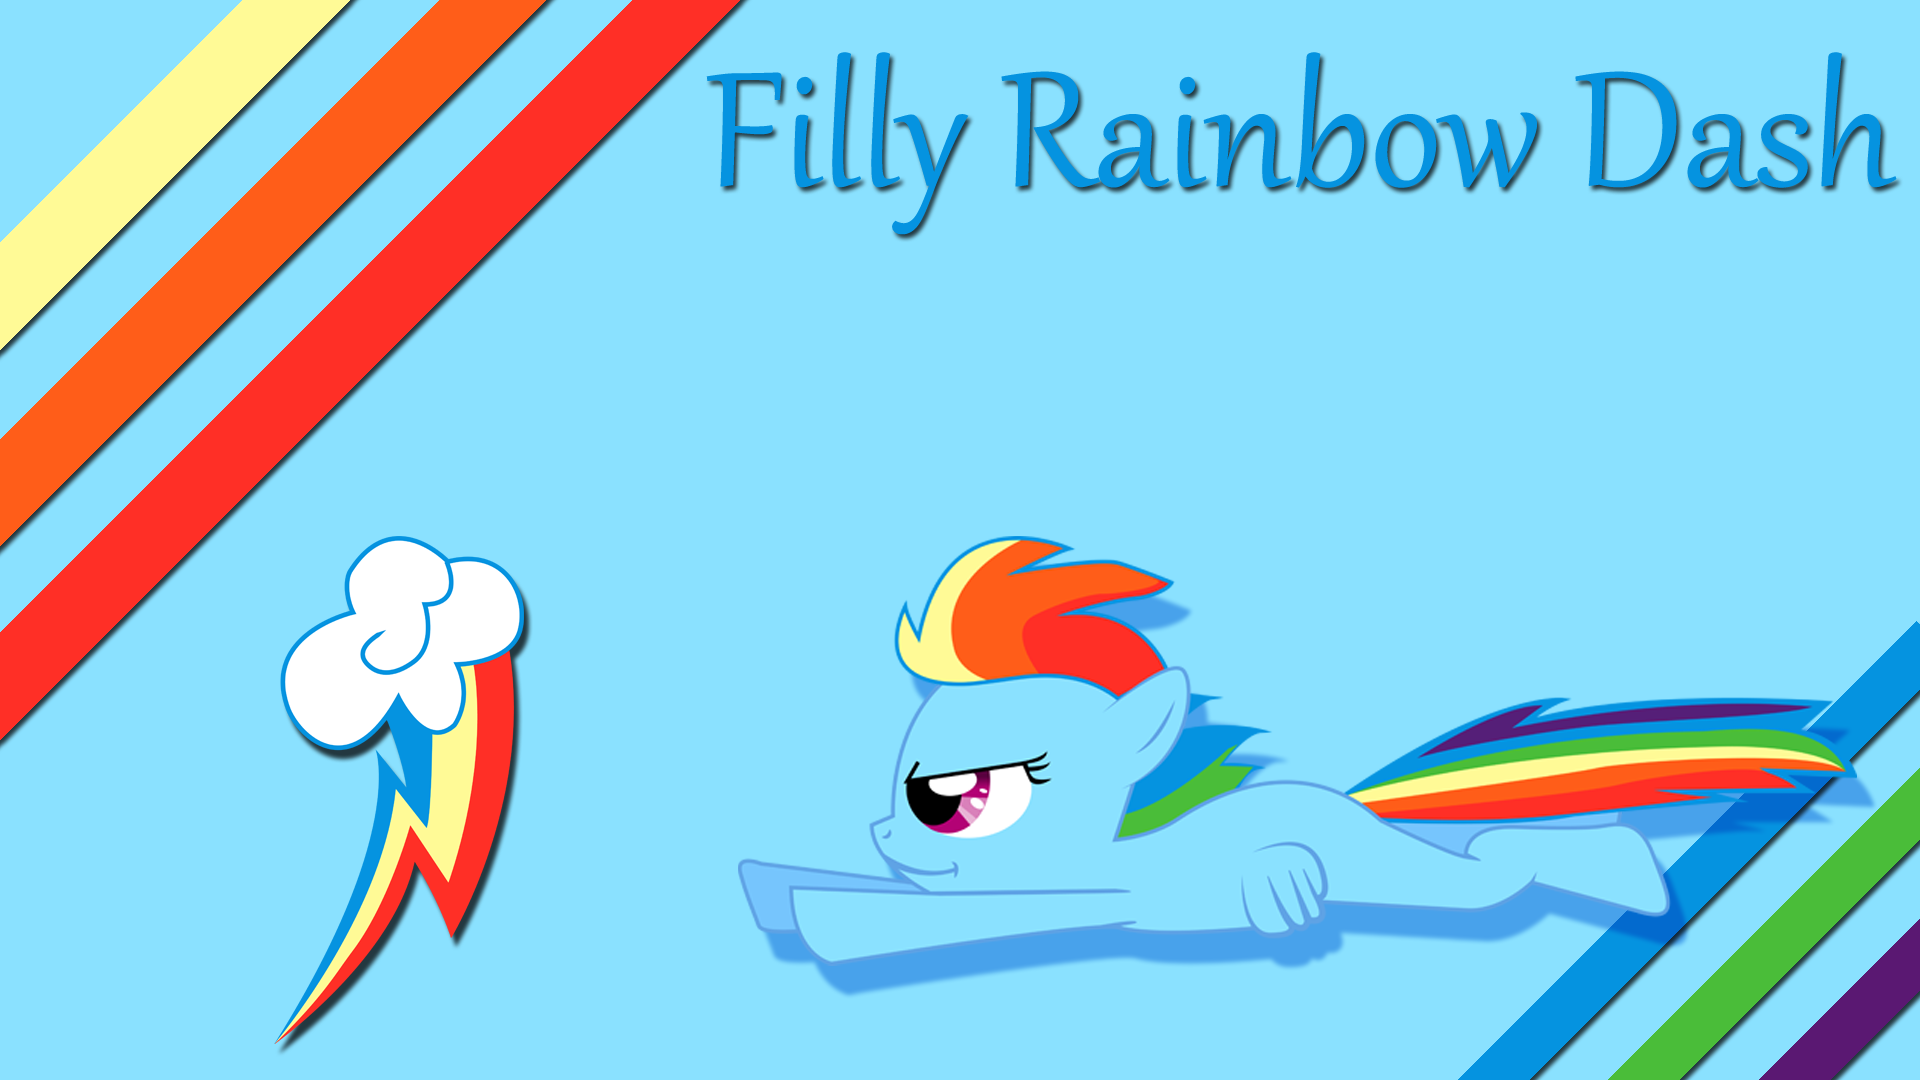 Filly Rainbow Dash Wallpaper by Silentmatten